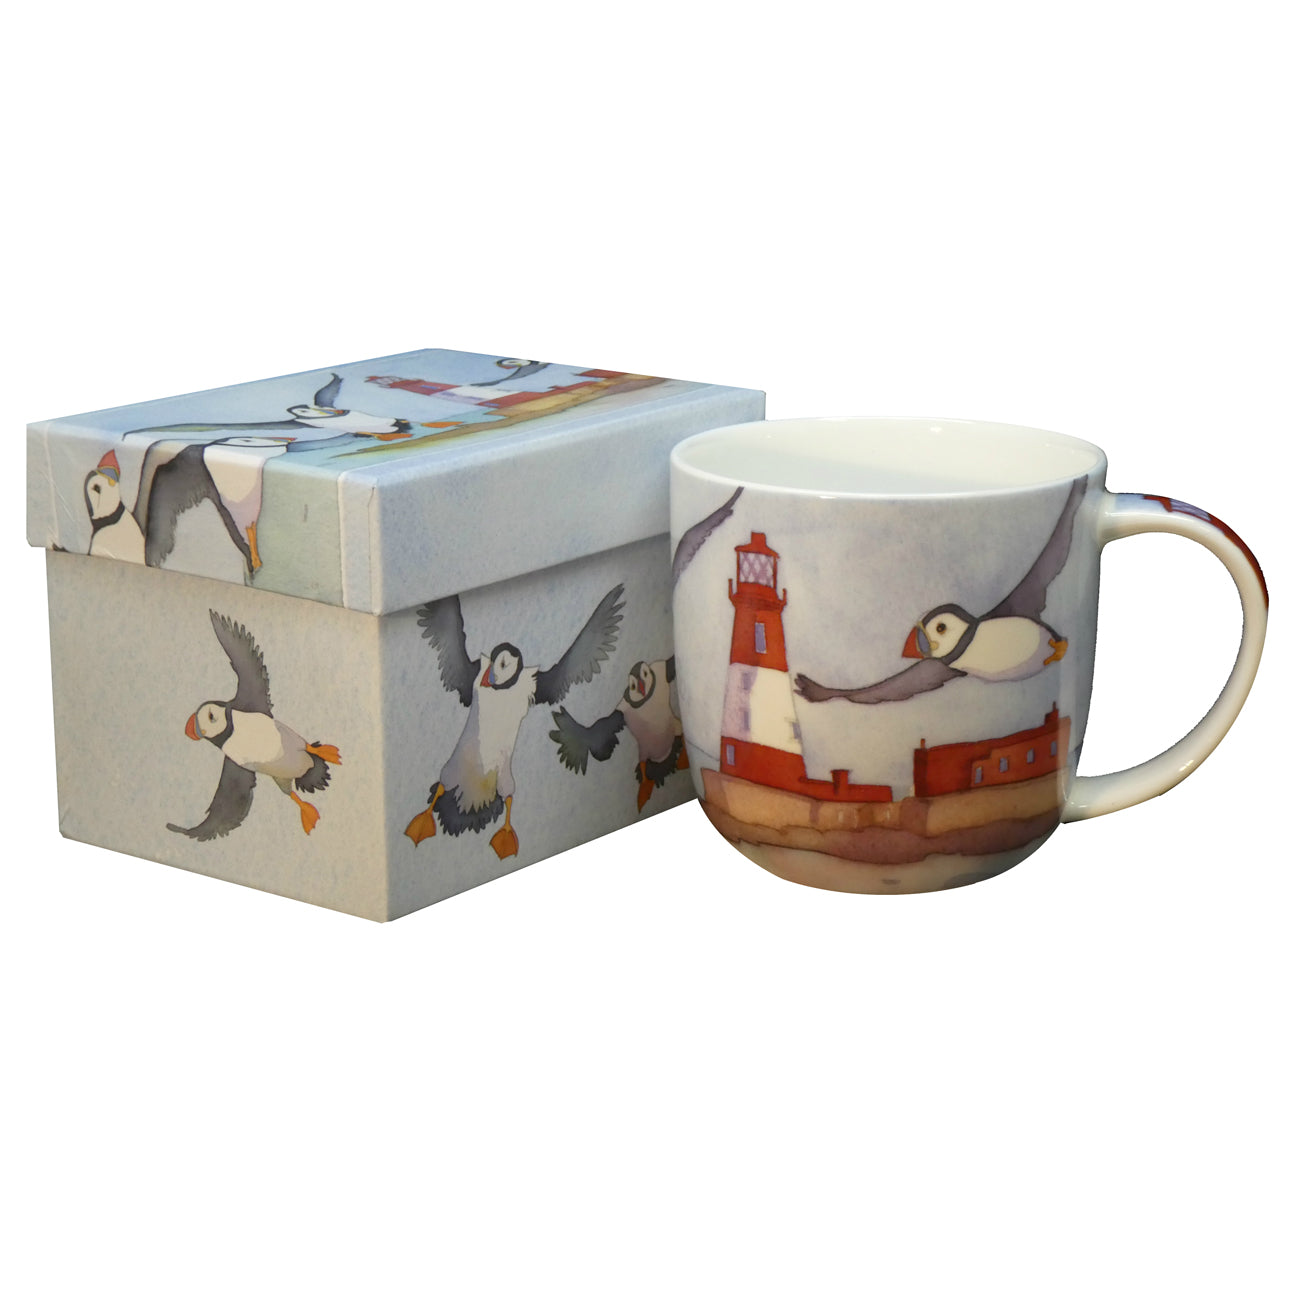 'Puffins and Lighthouse' Bone China Mug with Gift Box